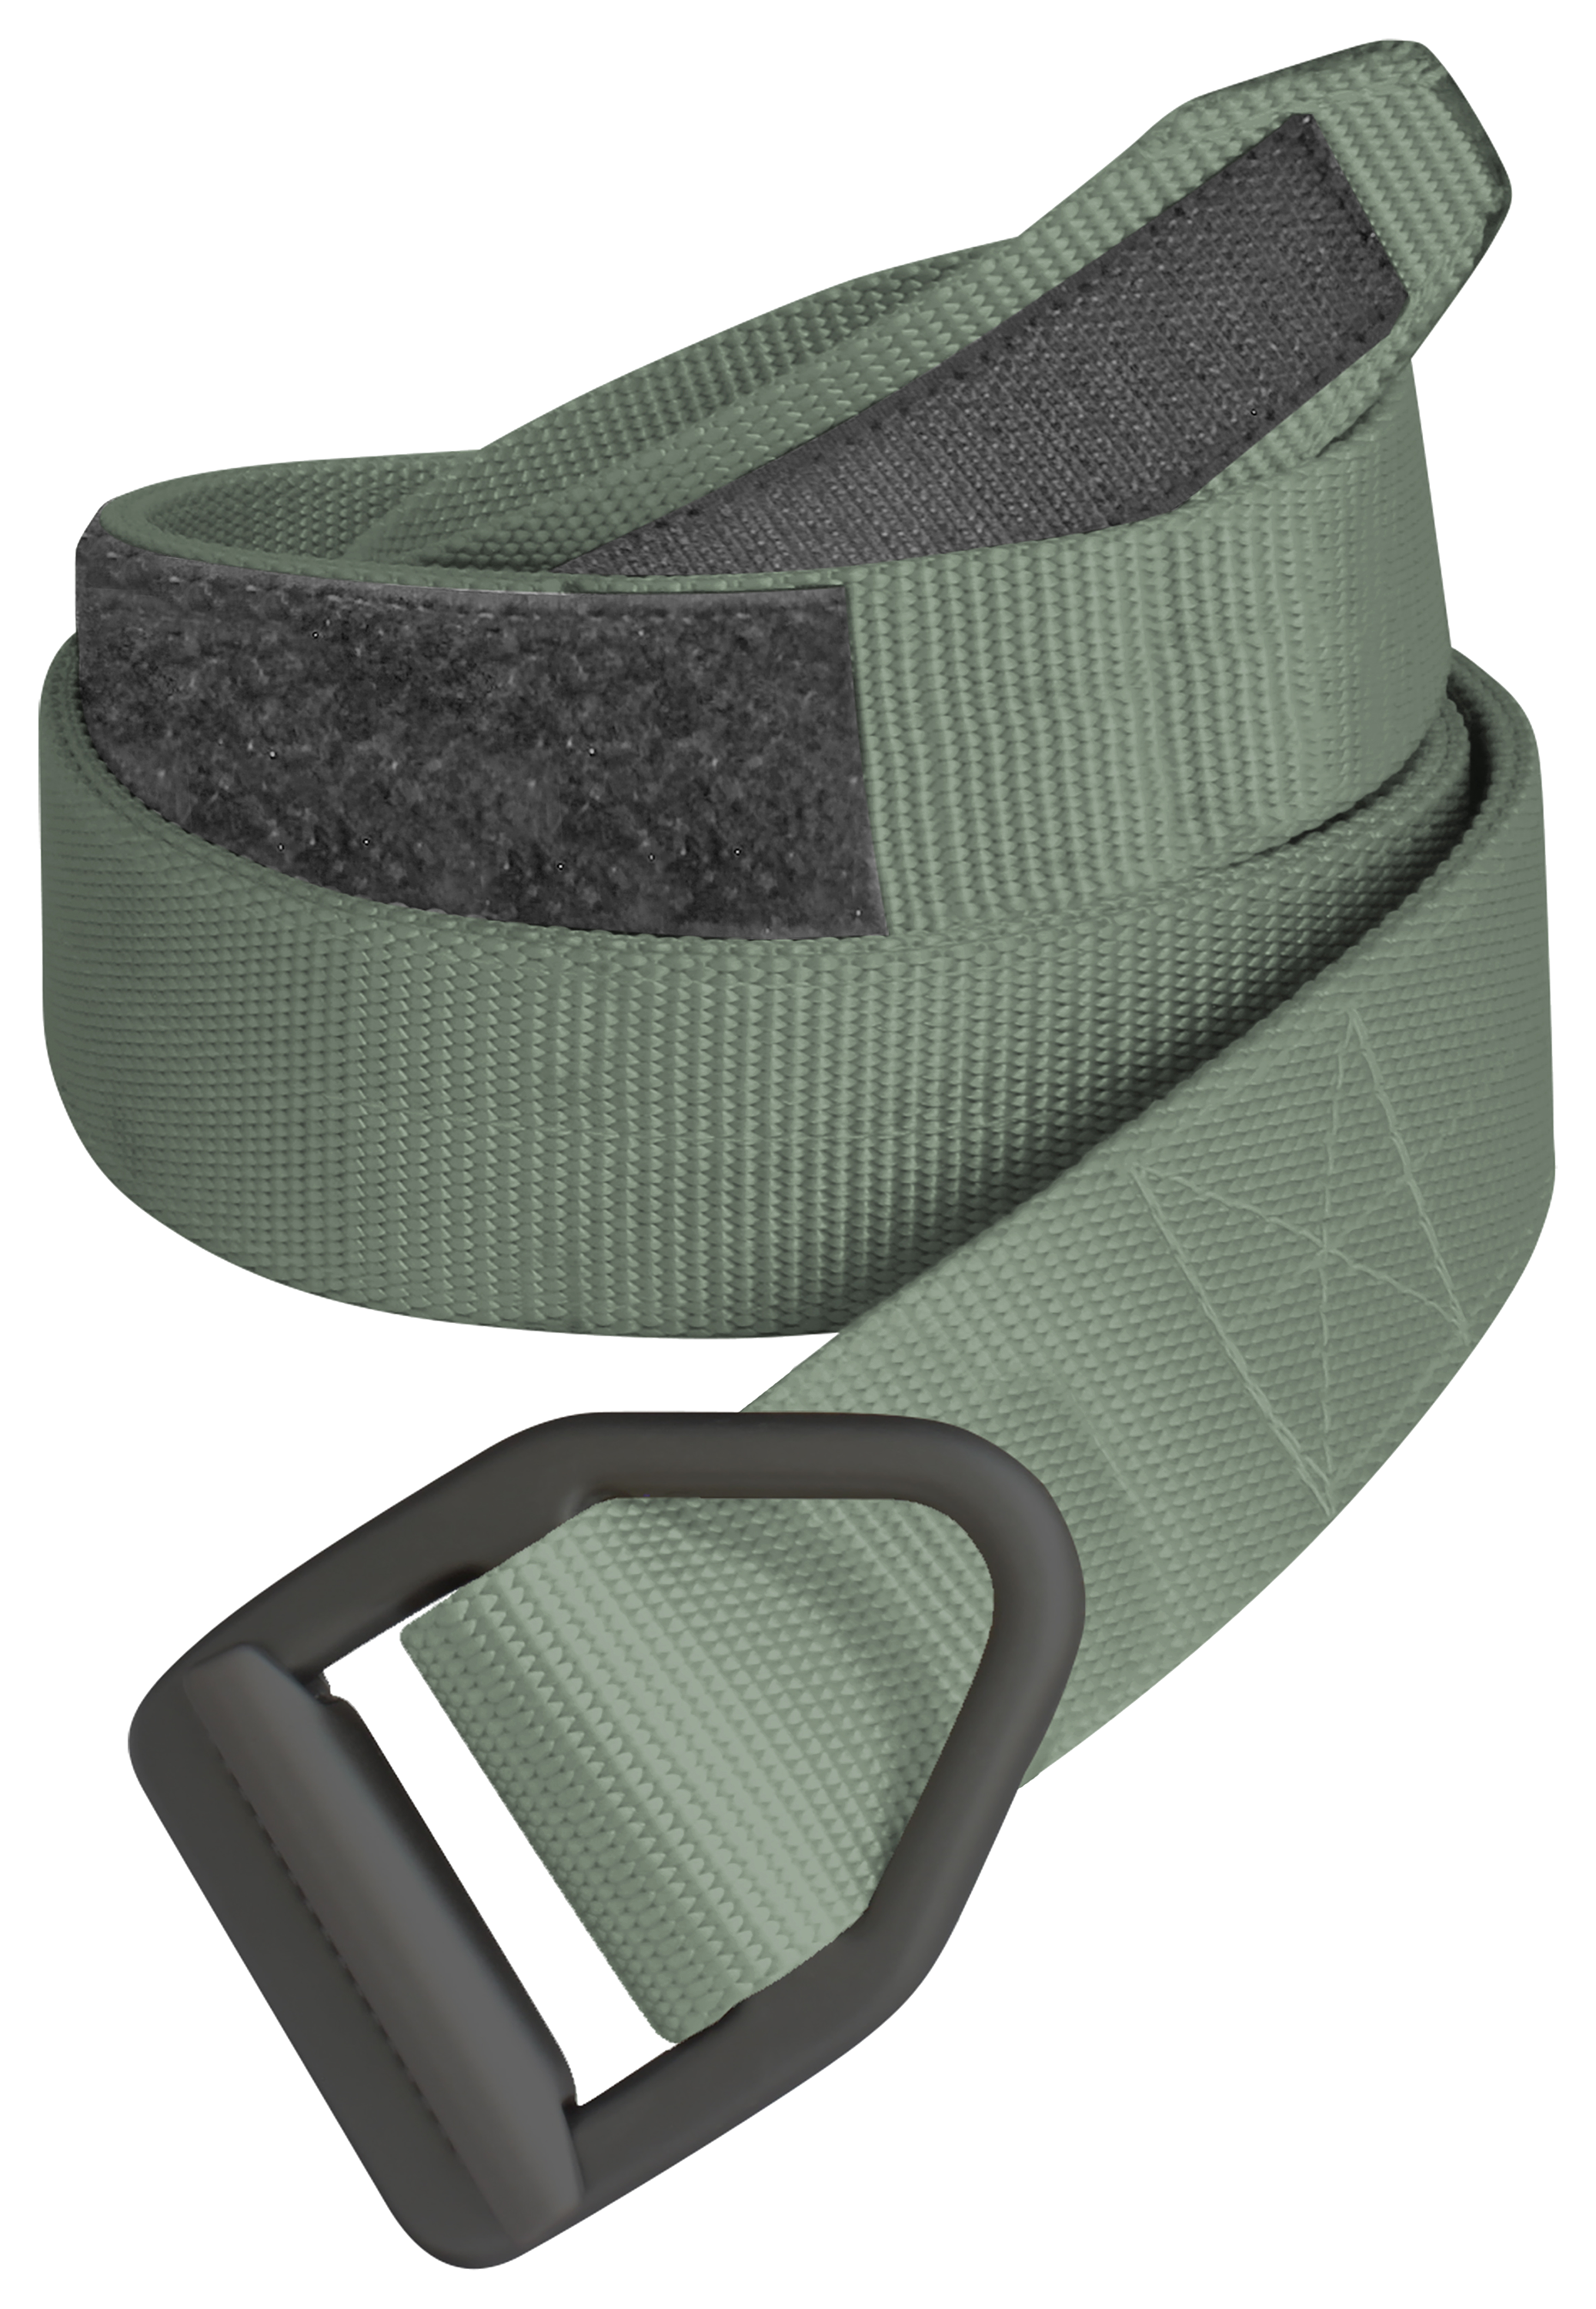 Bison Designs Last Chance Heavy-Duty Belt for Men - Olive - XL